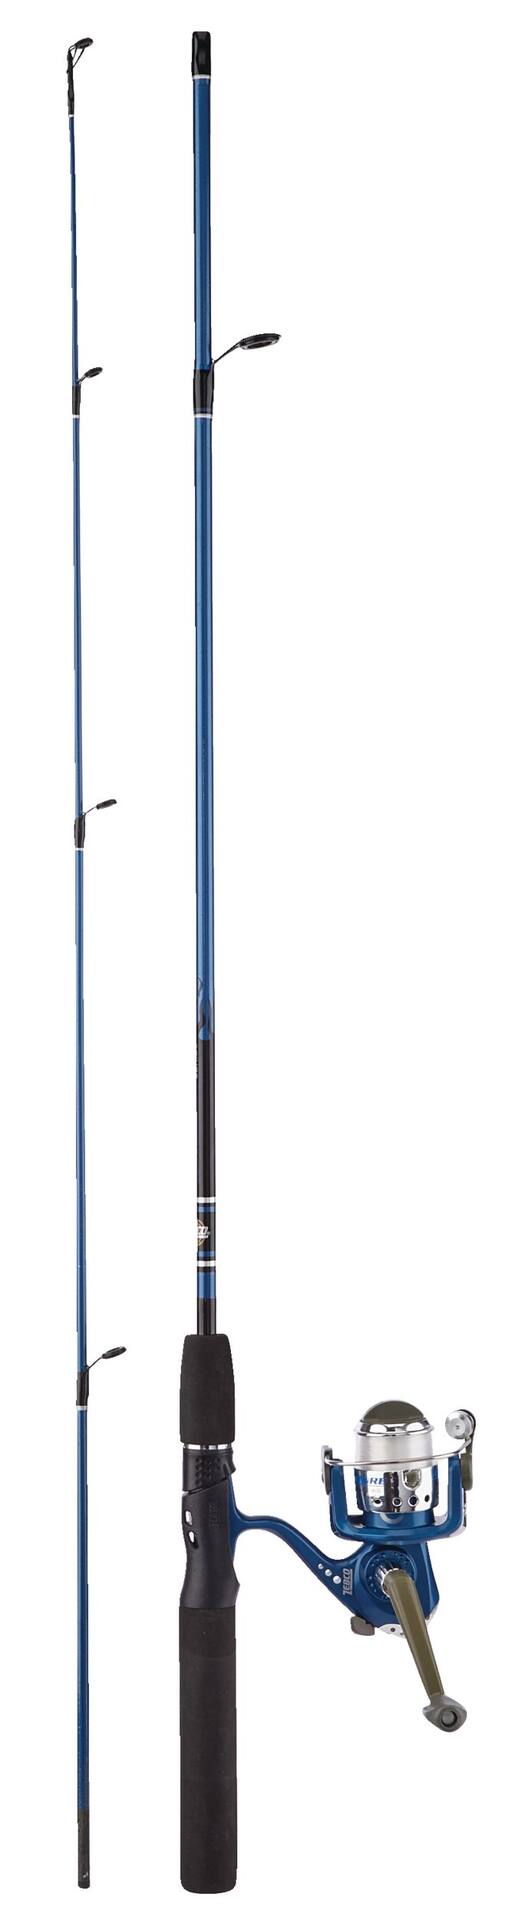 New - Disney - Star Wars Light-Up Zebco Fishing Pole Rod 🎣🐟